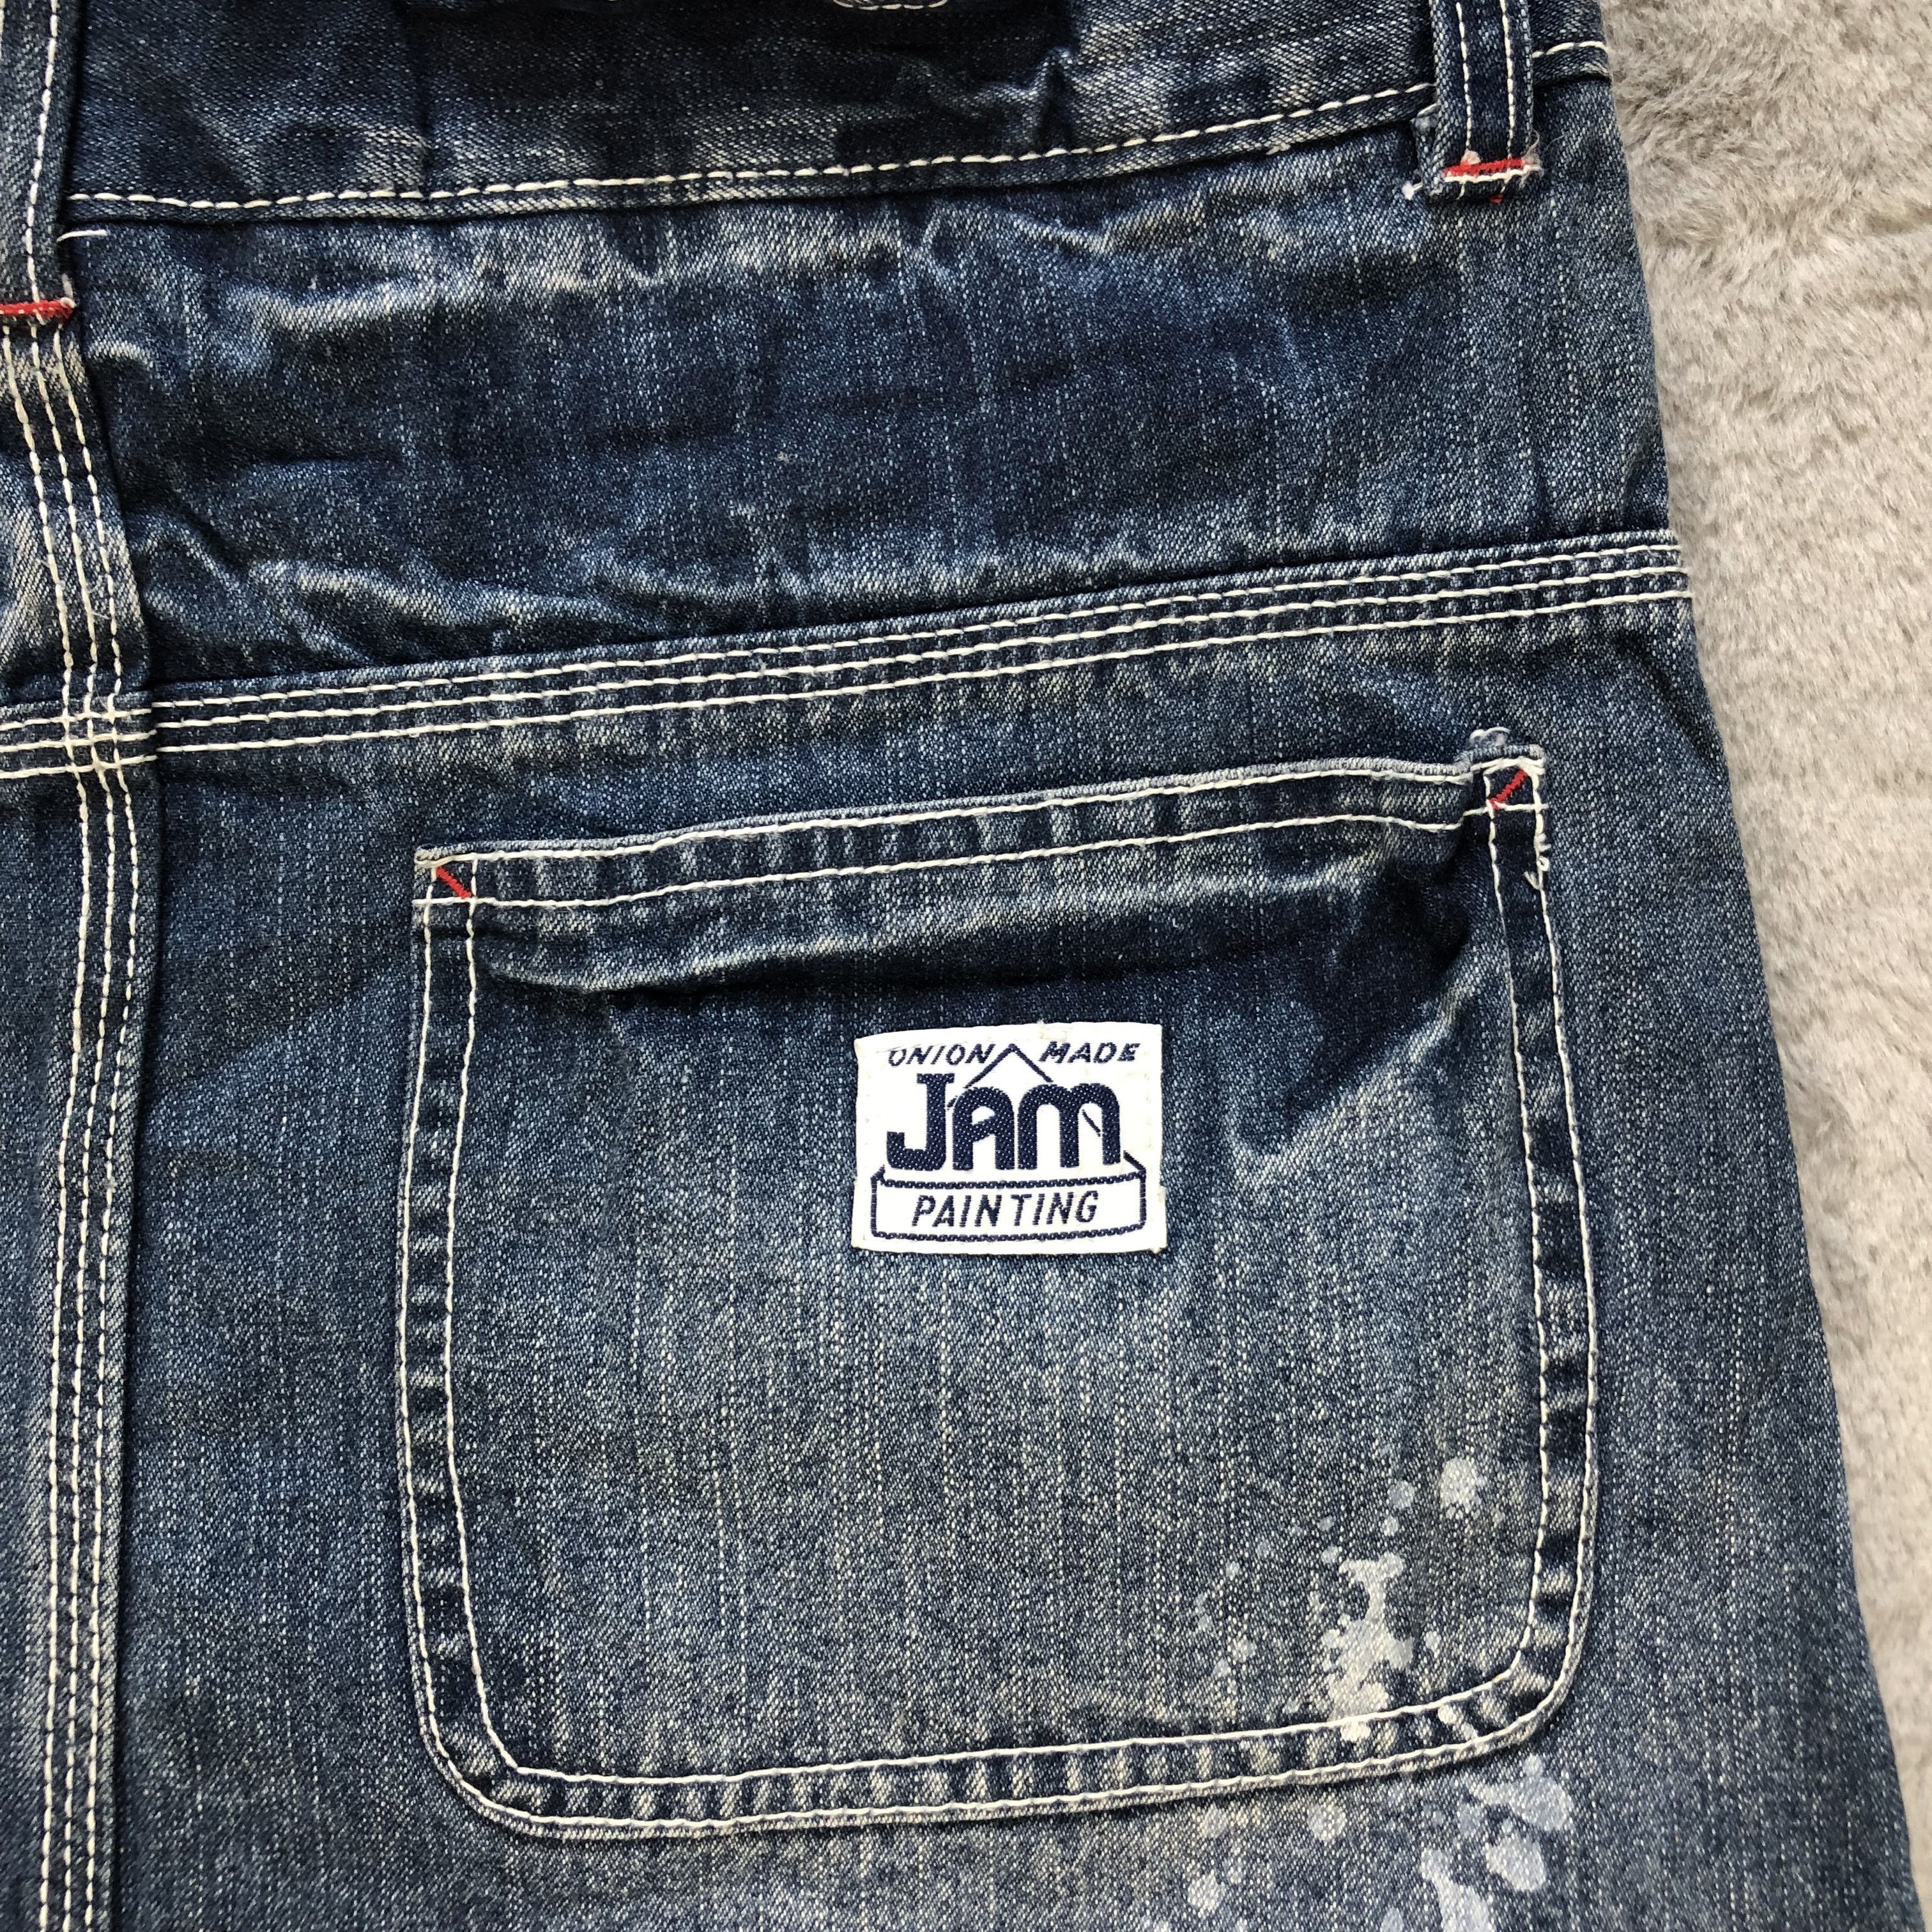 Japanese Brand - JAM JOYFUL AND MONSTER DOUBLE WAISTED JEANS SKIRTS #6904-96 - 11